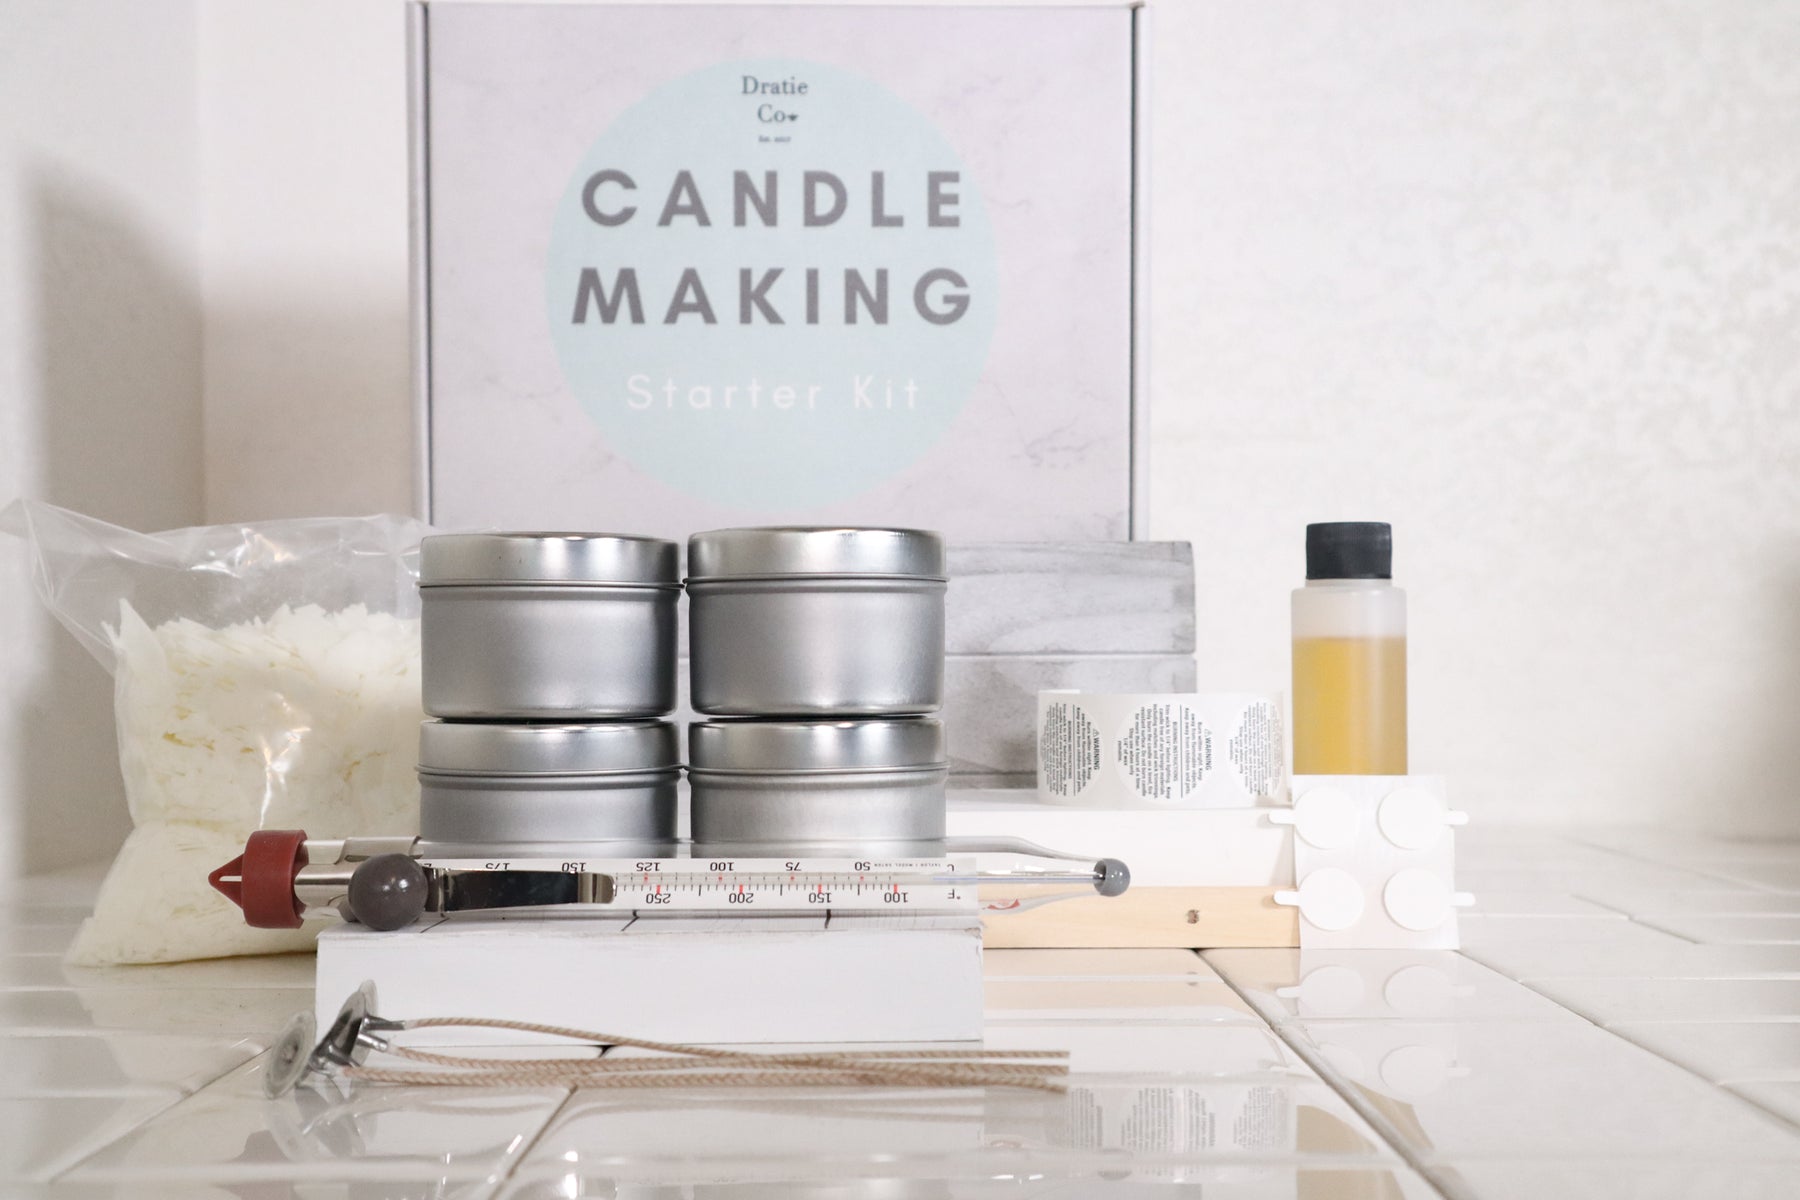 The Candle Maker Starter Kit